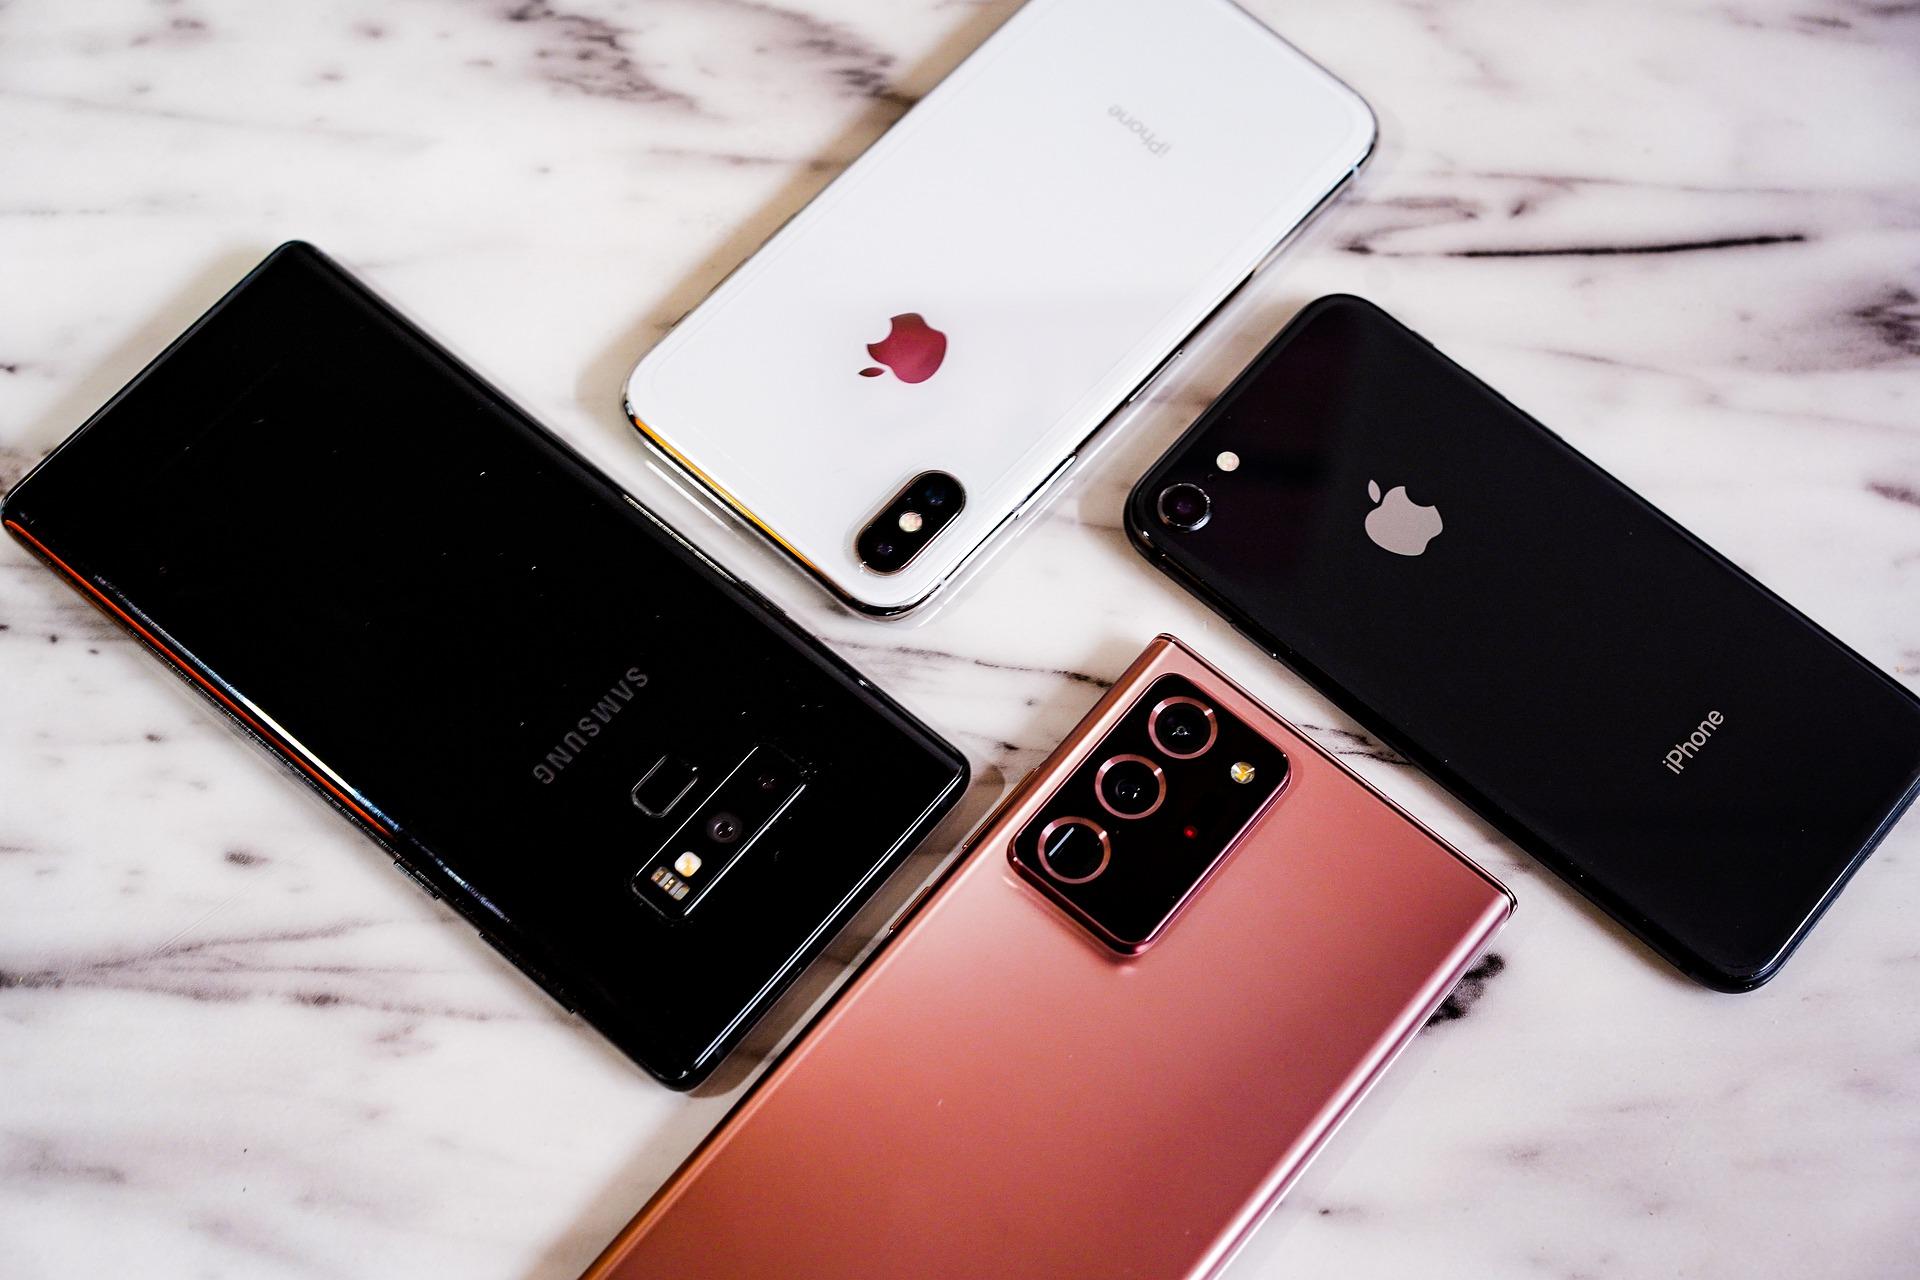 Связной назвал 3 самых популярных смартфона лета 2020